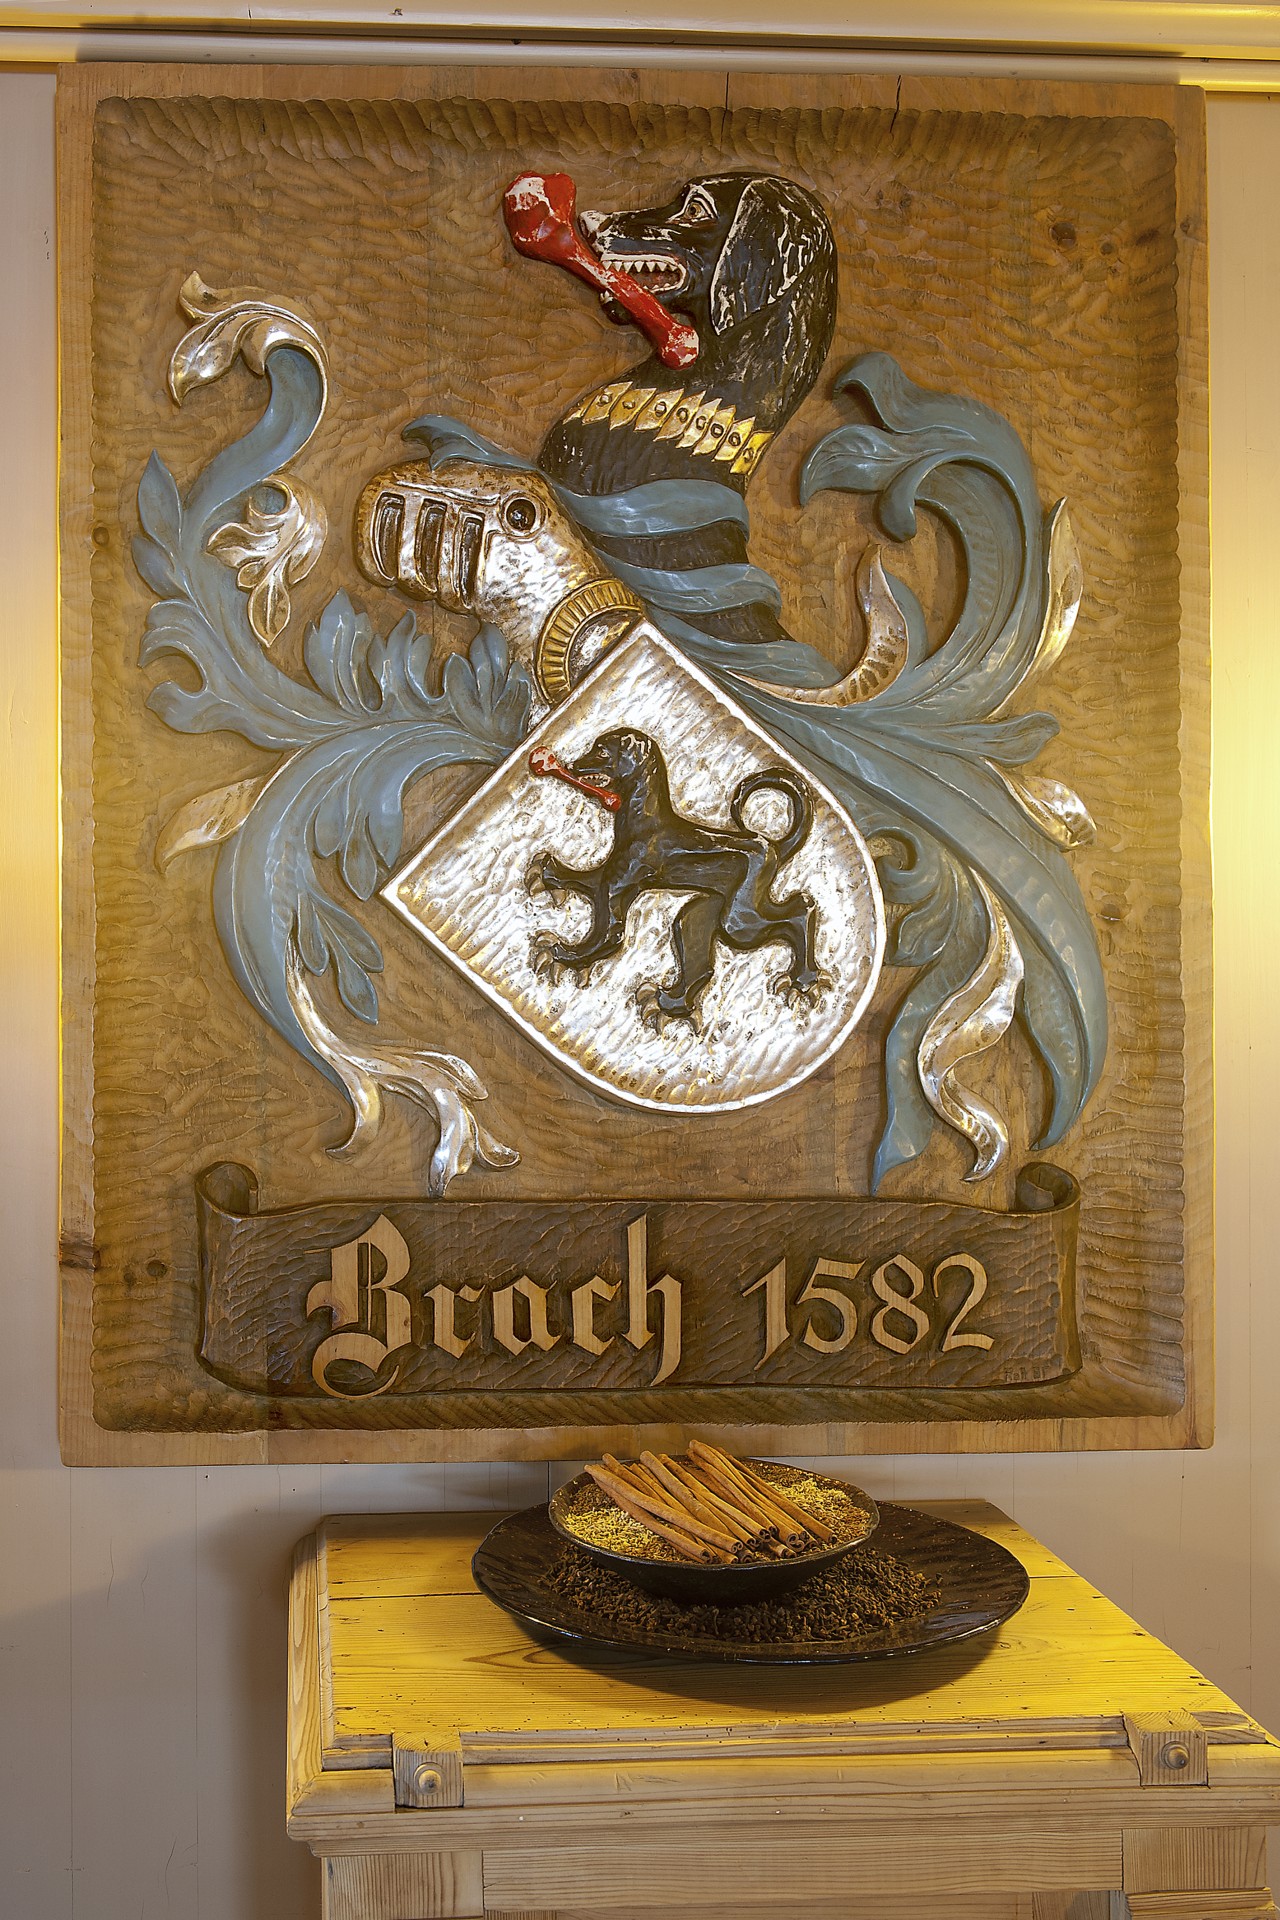 Storia: Brach 1582